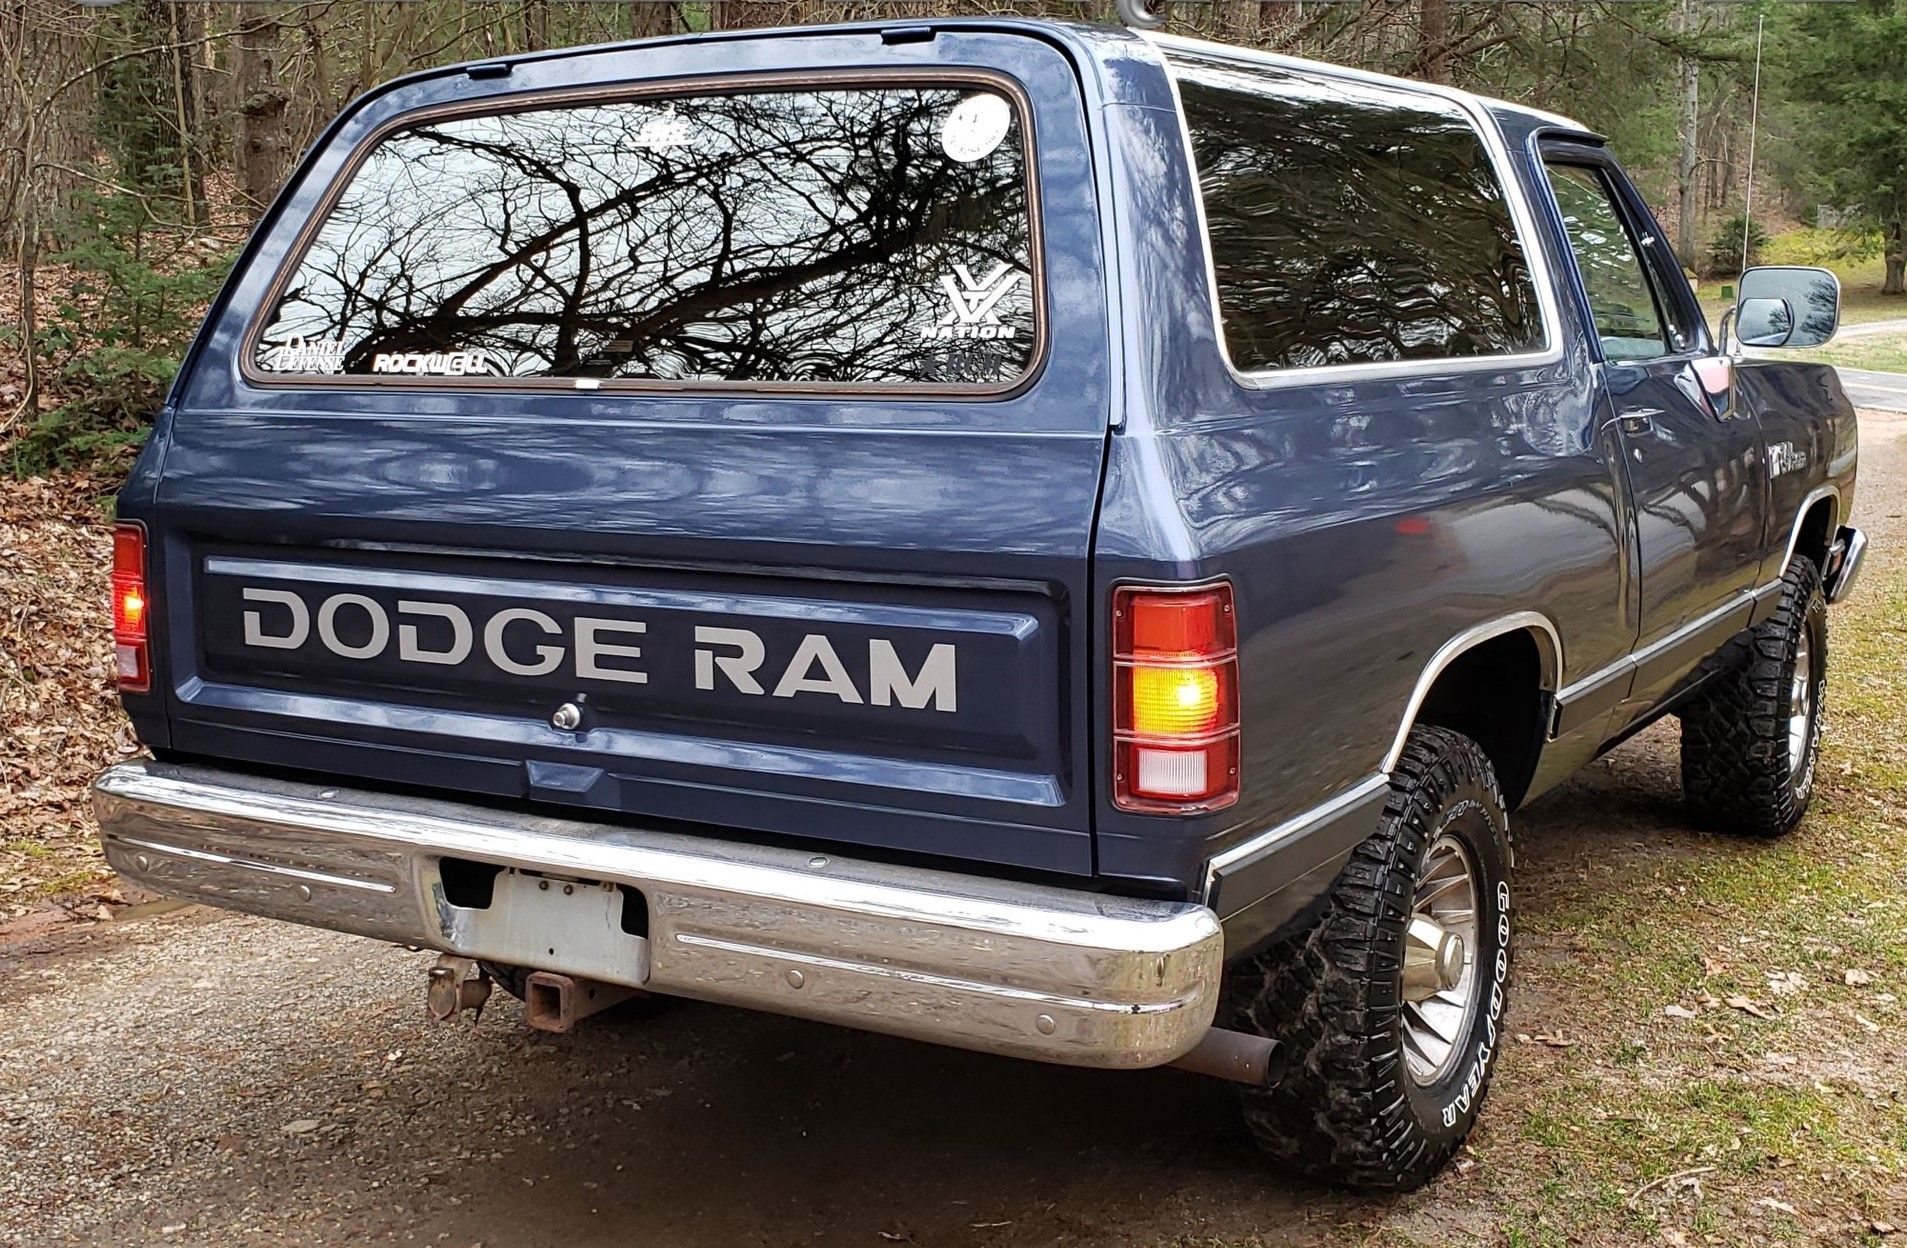 Grab A 1988 Dodge Ramcharger For Under $15K